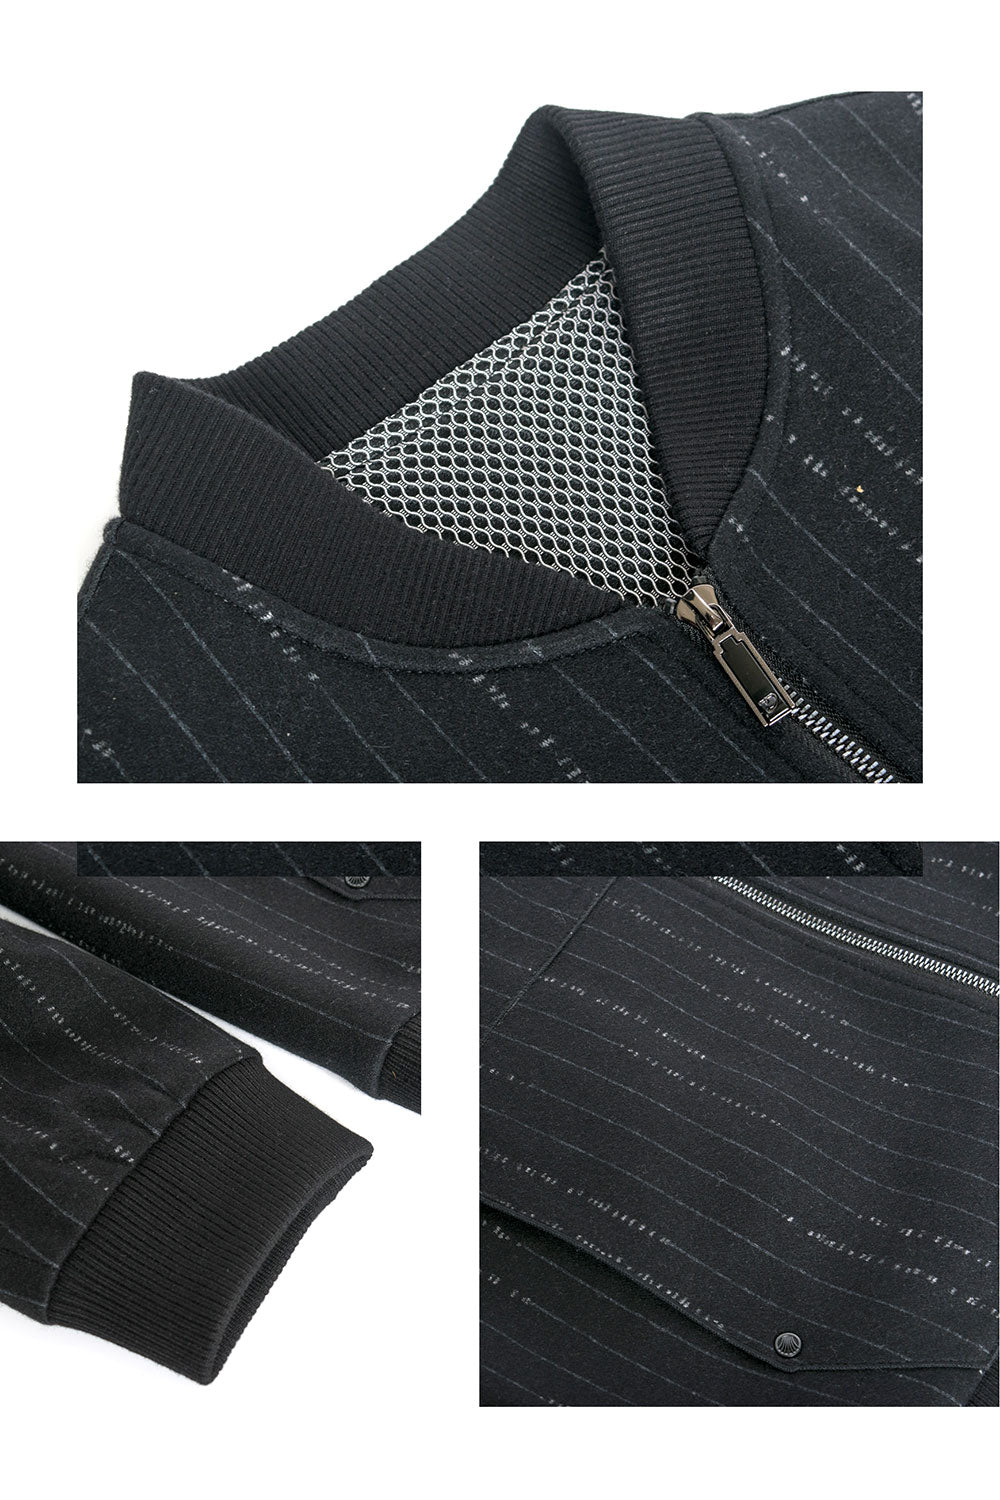 Barabas Men Coat Black grey knit collar liner jacket BH60 